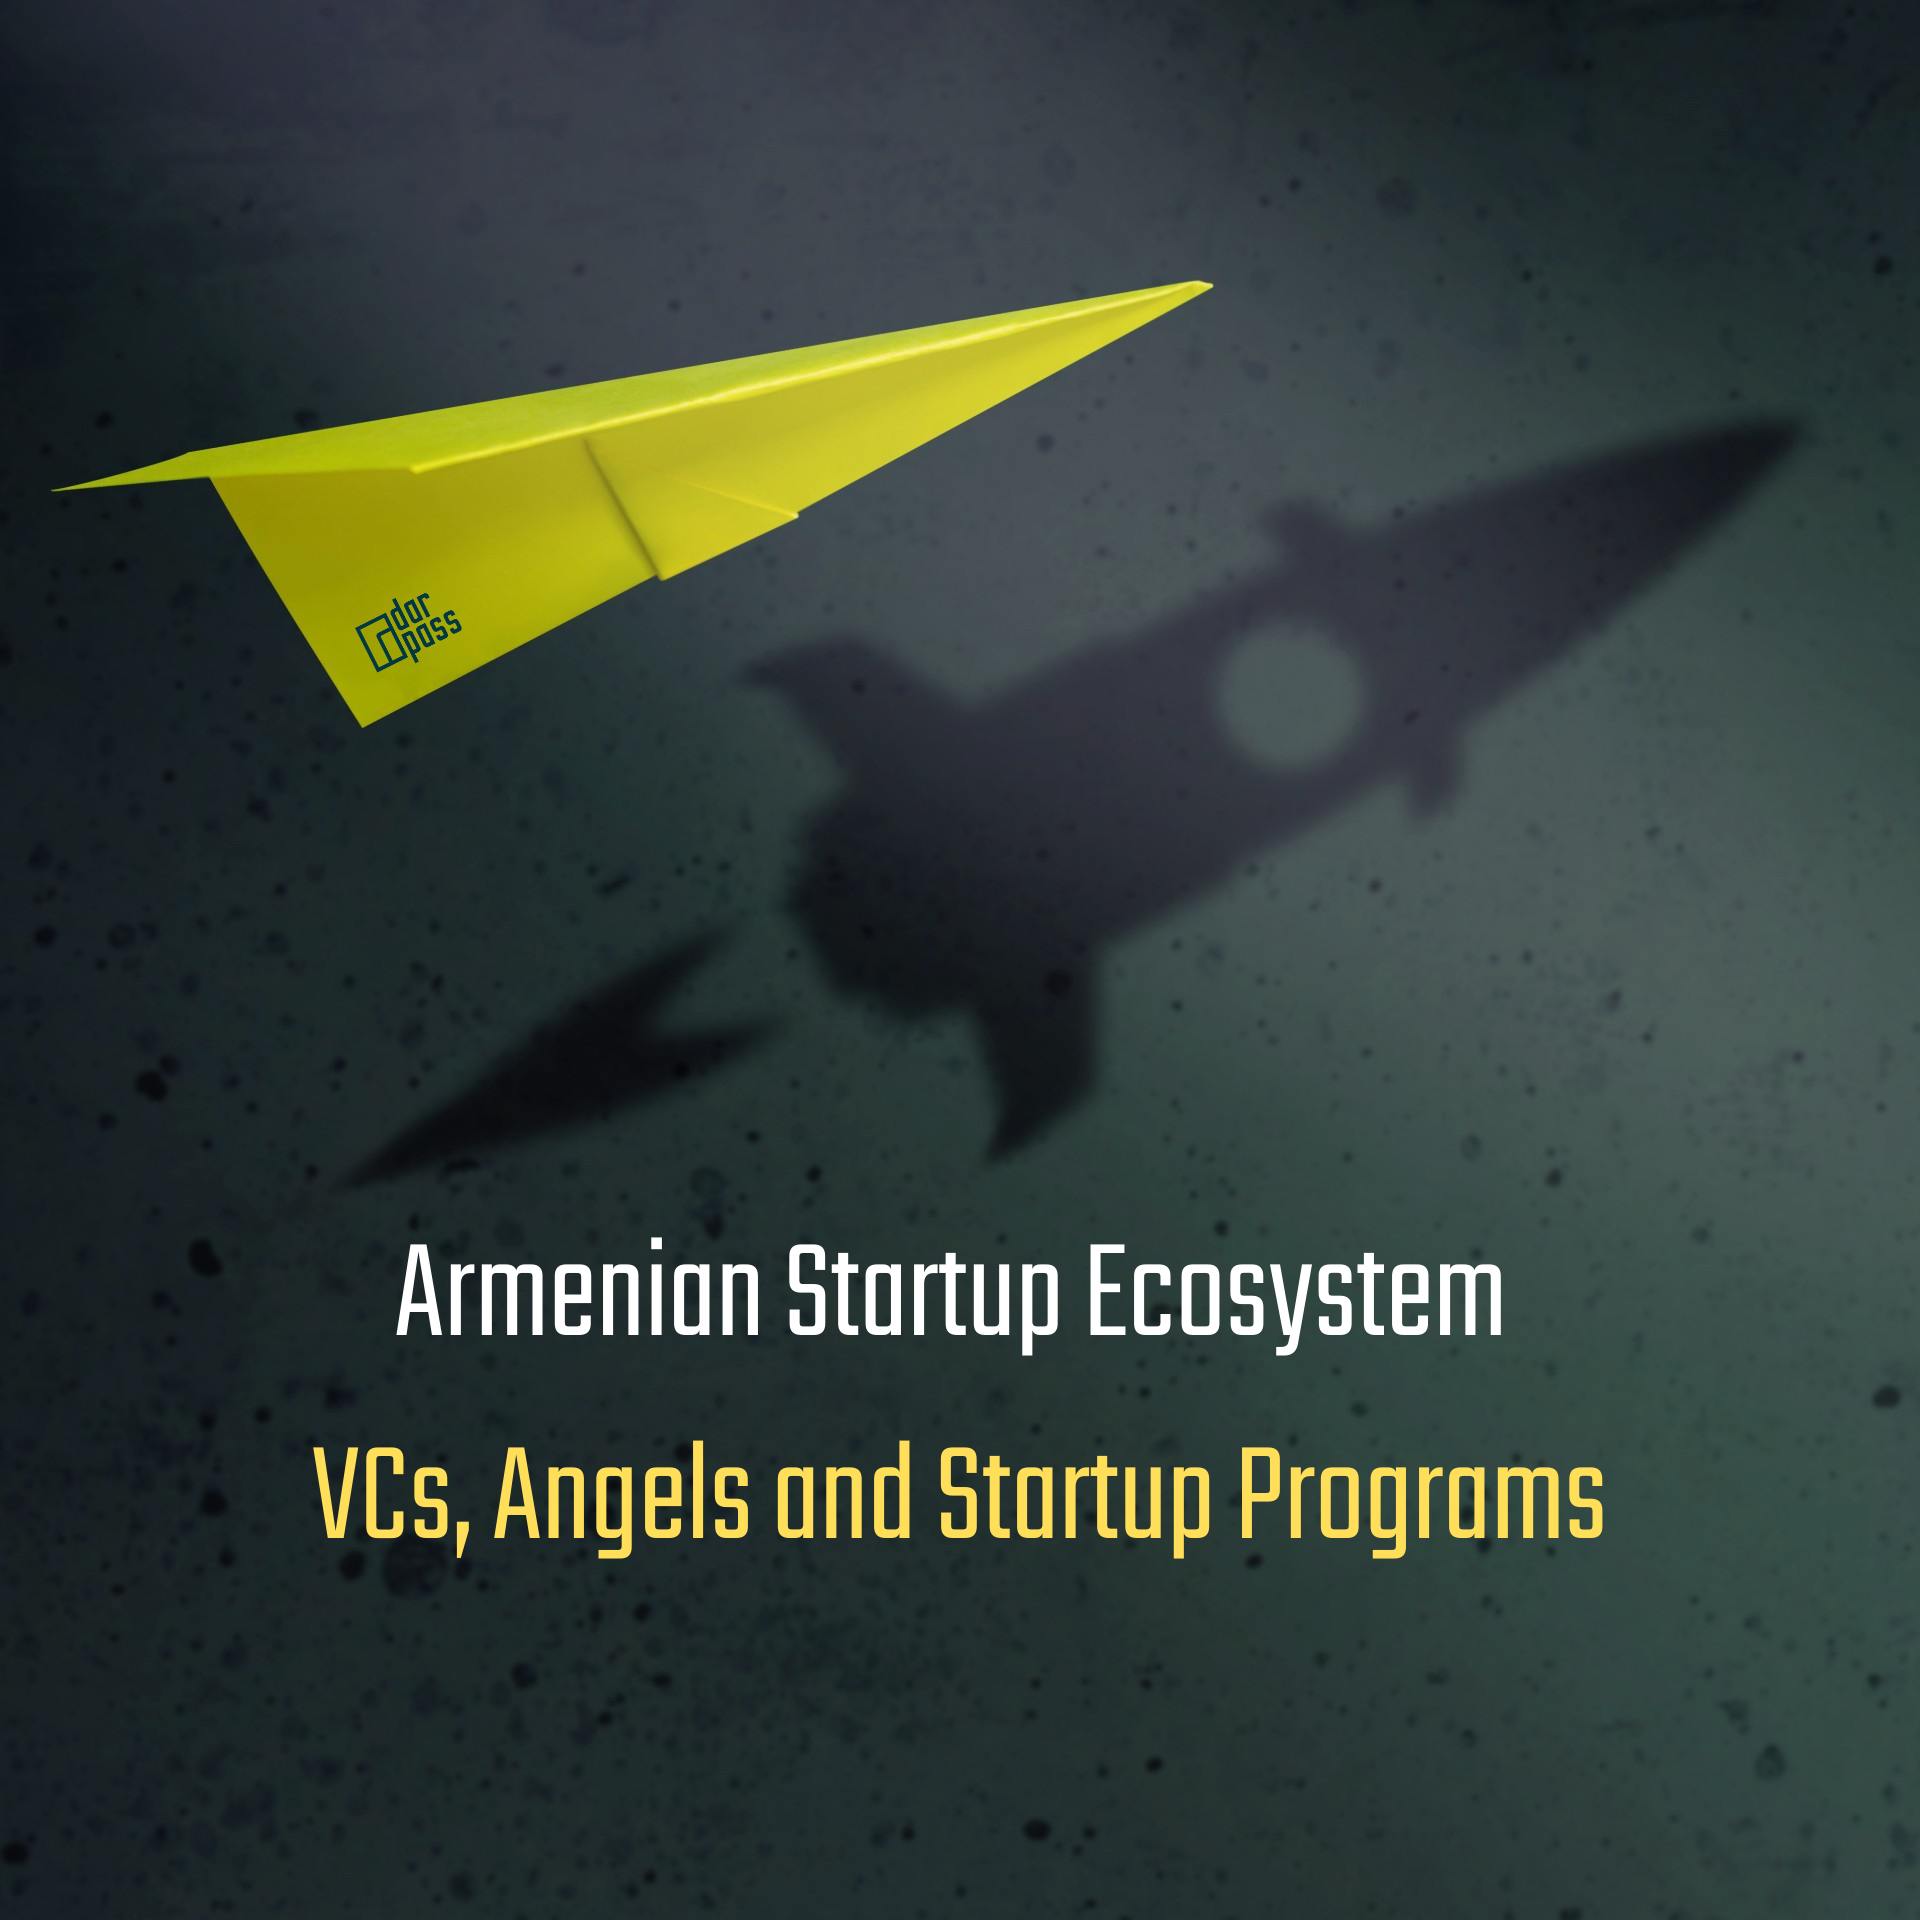 Startup ecosystem of Armenia